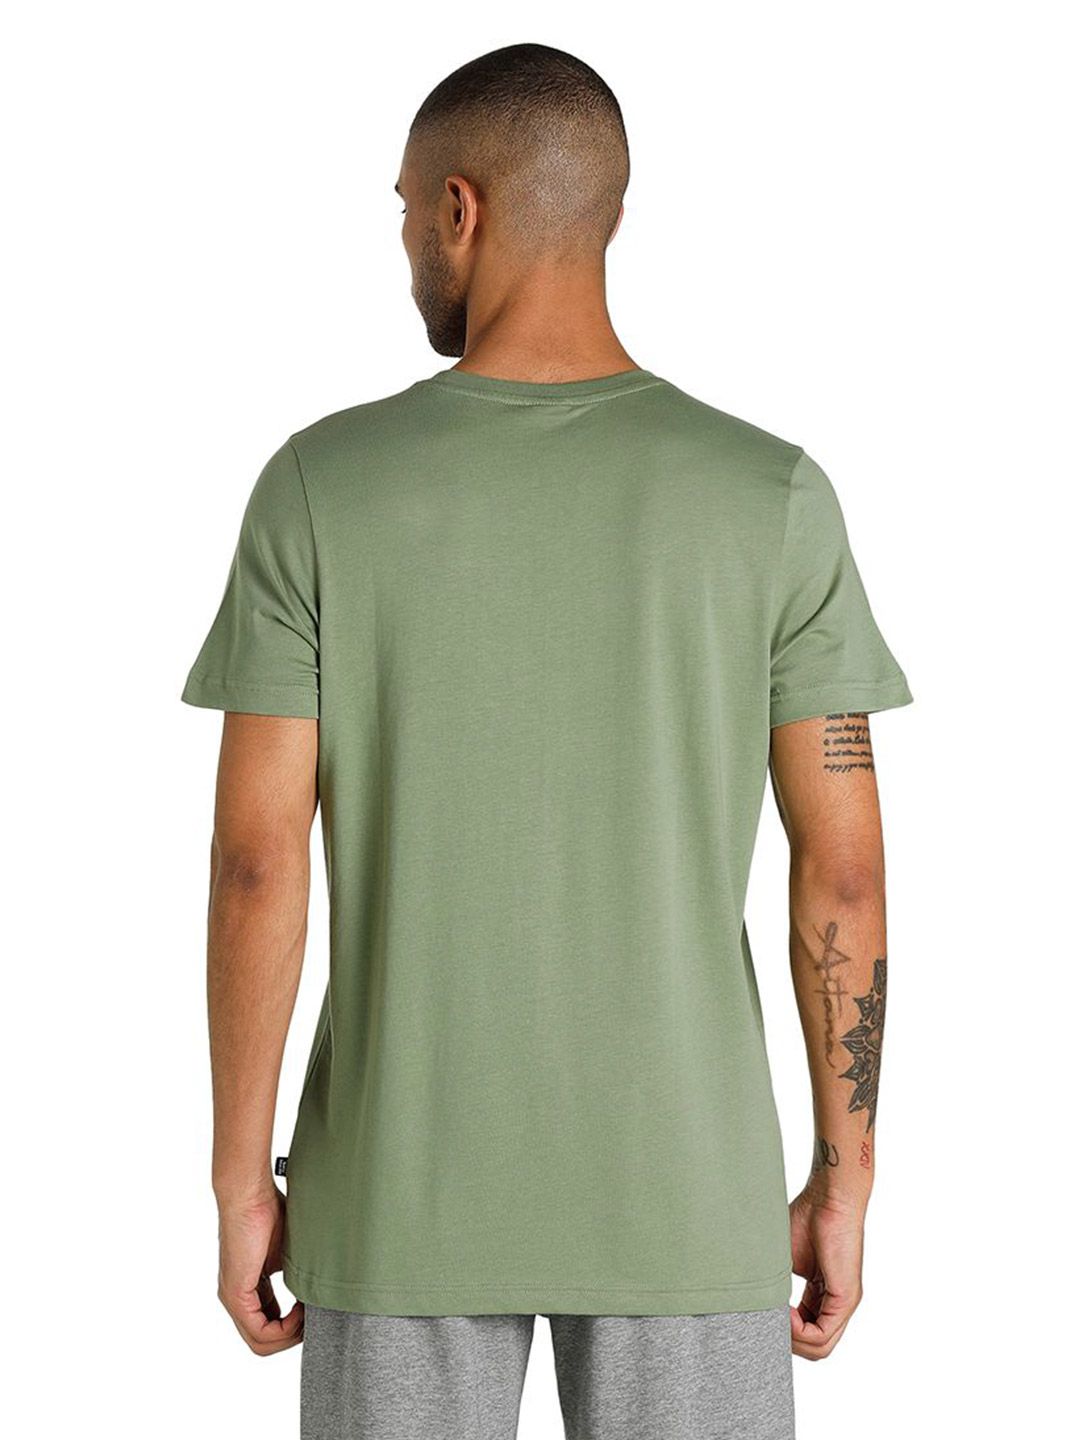 Men Black Green Printed T-Shirt From Fancode Shop.